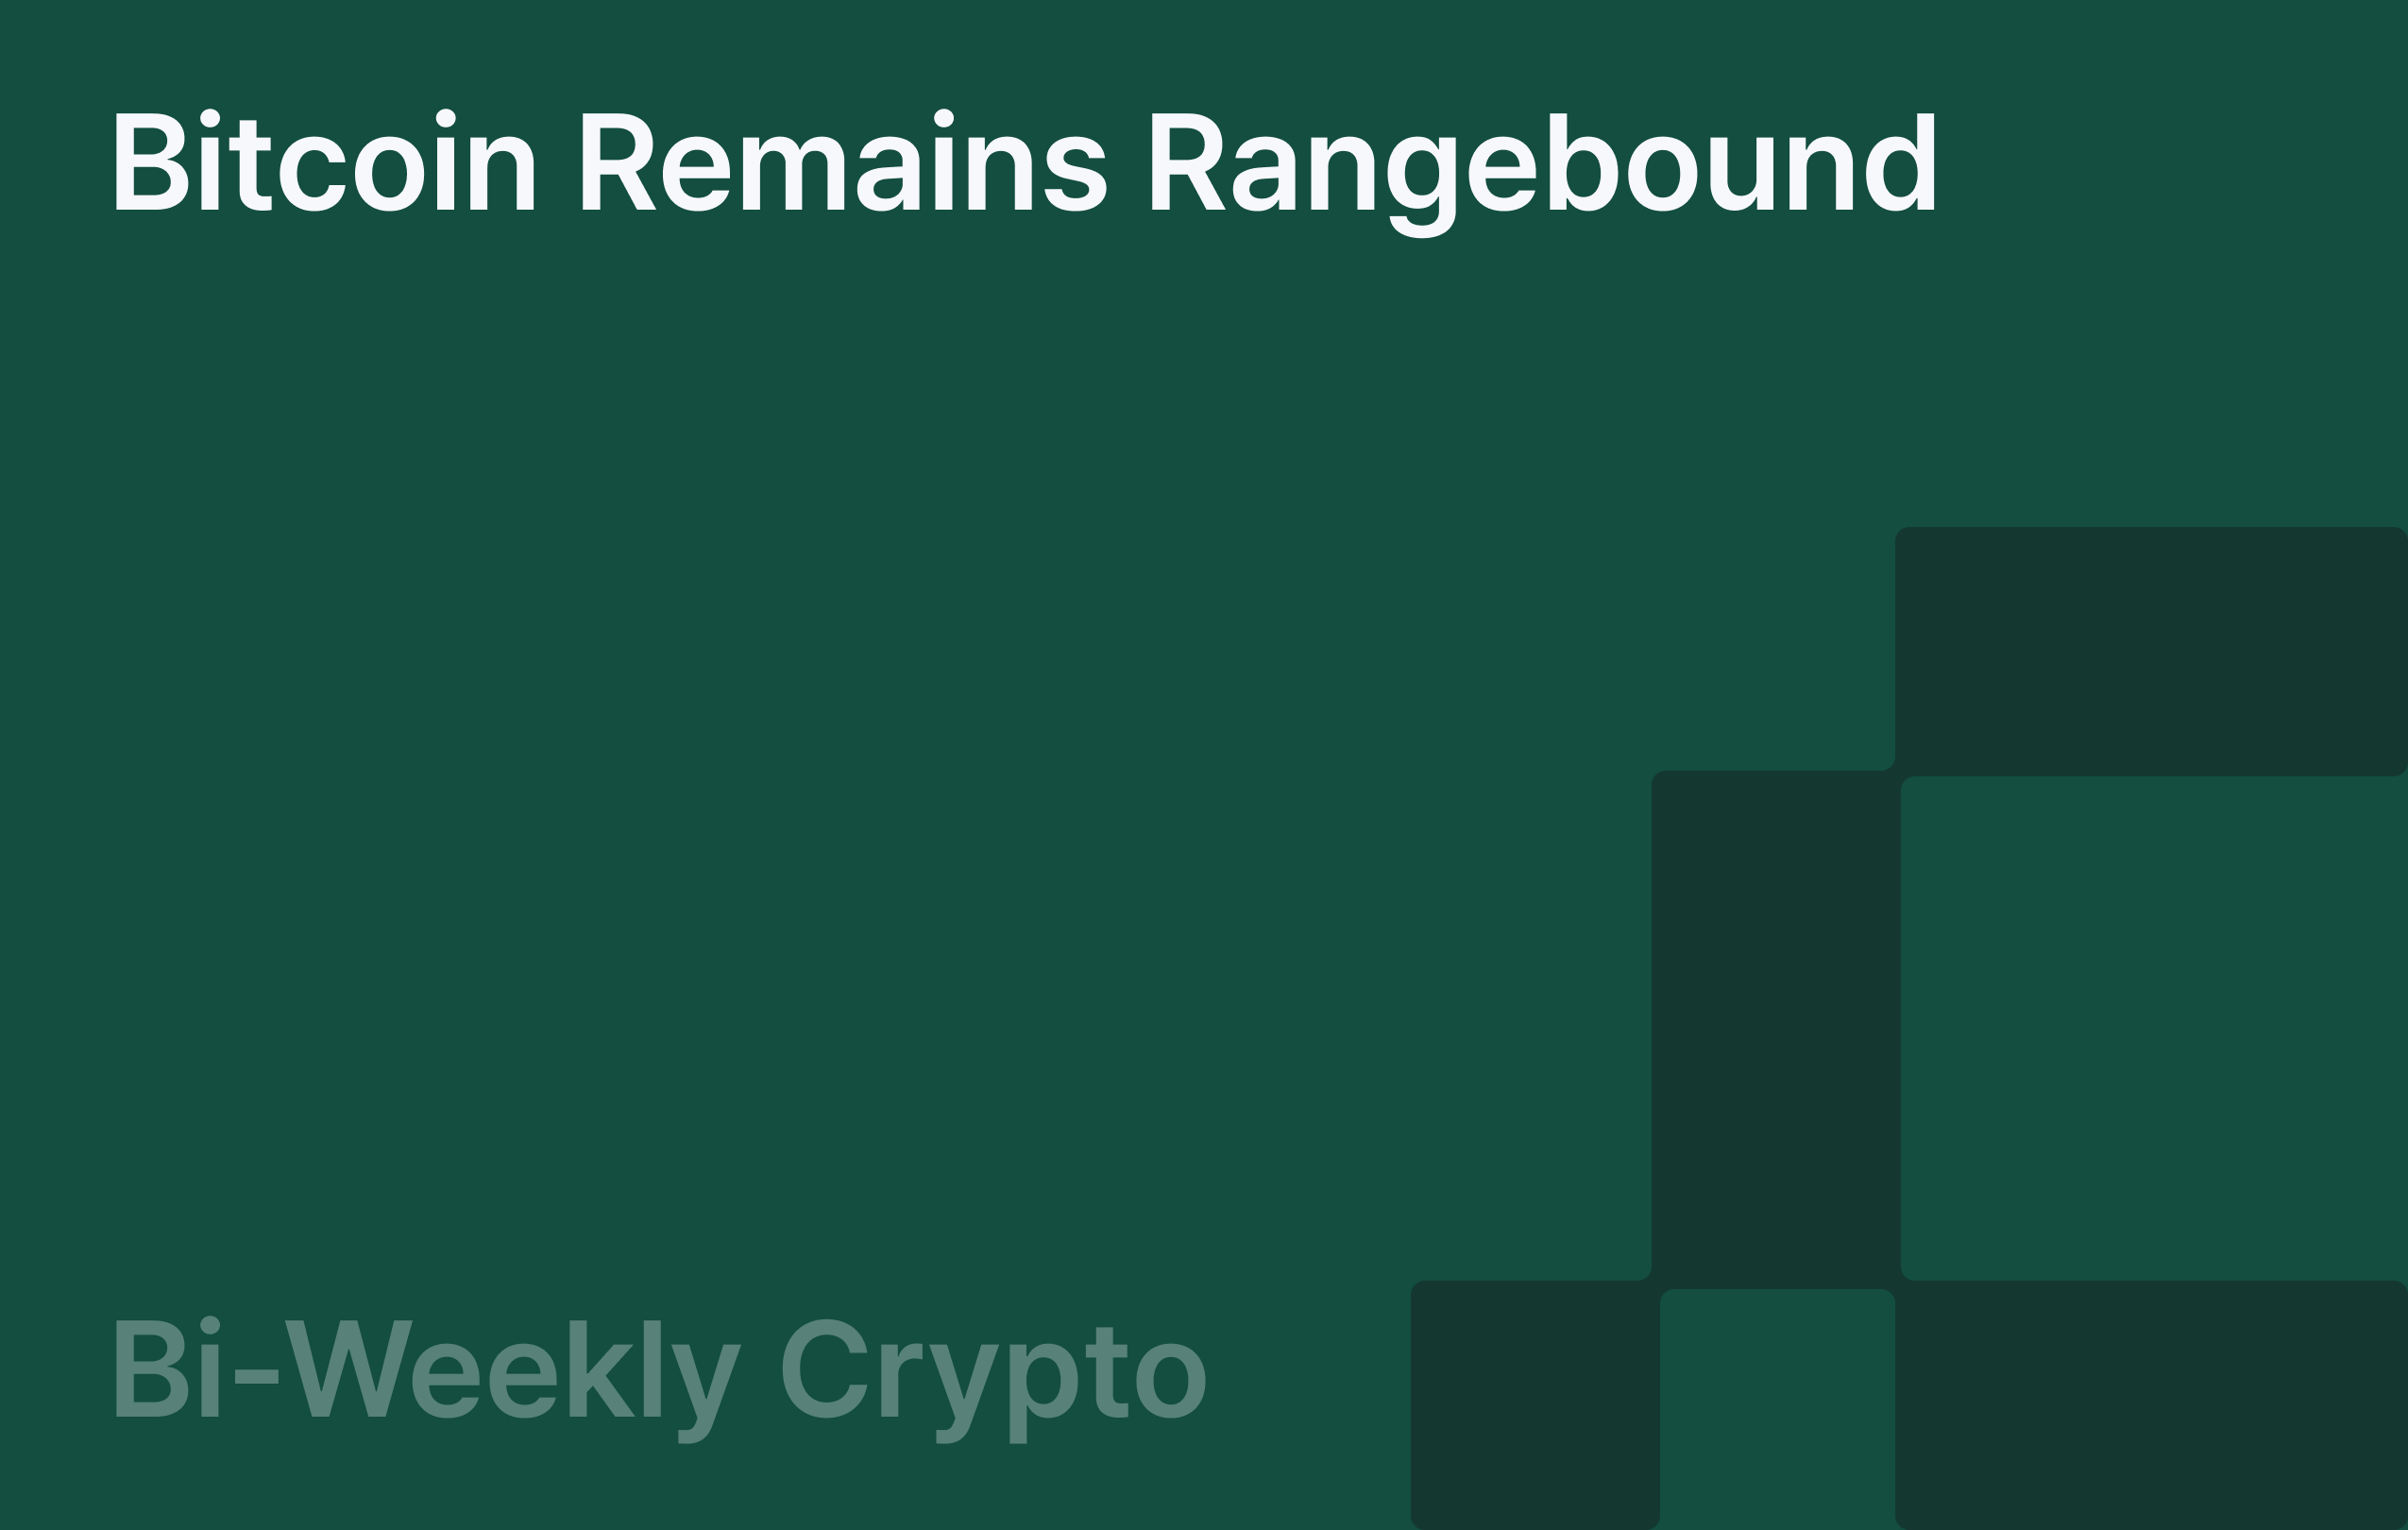 Bi-Weekly Crypto: Bitcoin remains rangebound